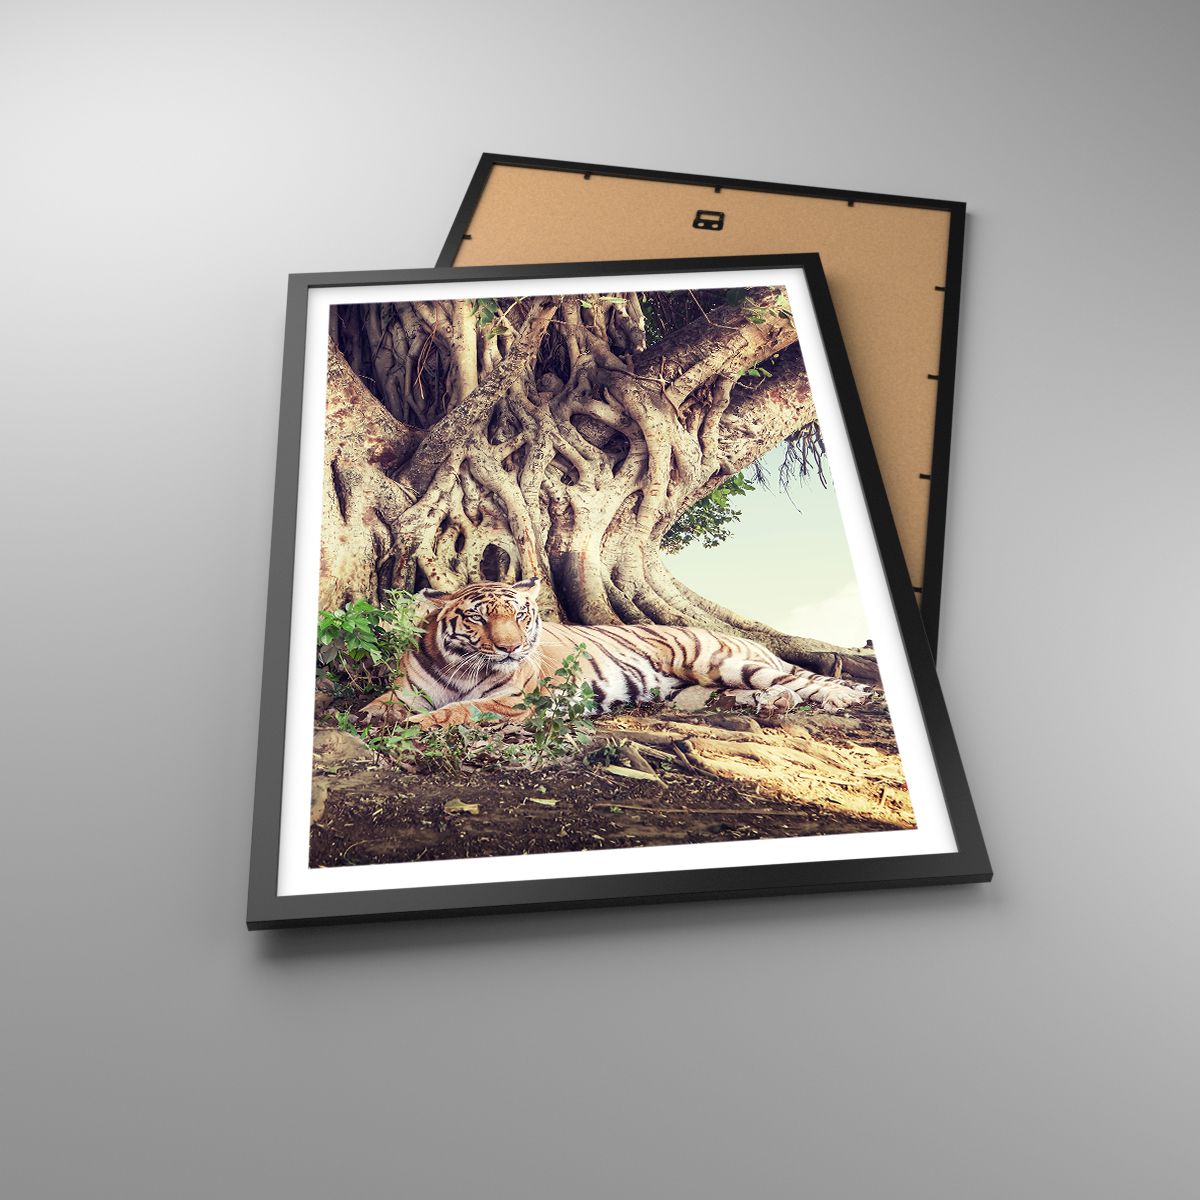 Poster Bengalischer Tiger, Poster Indien, Poster Landschaft, Poster Natur, Poster Baum